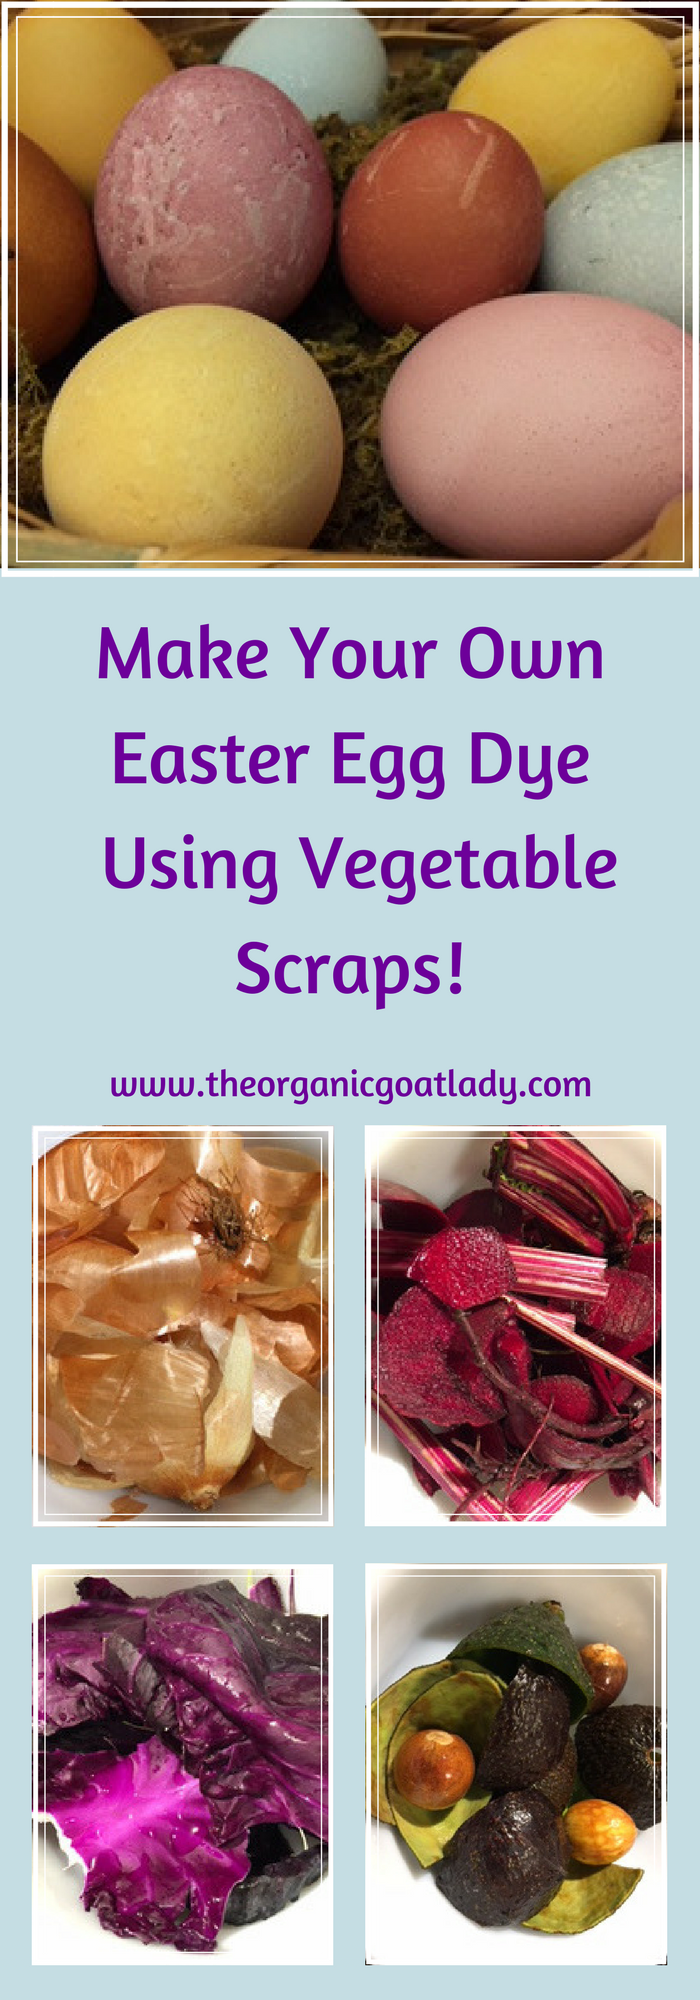 Make Your Own Easter Egg Dye Using Vegetable Scraps!